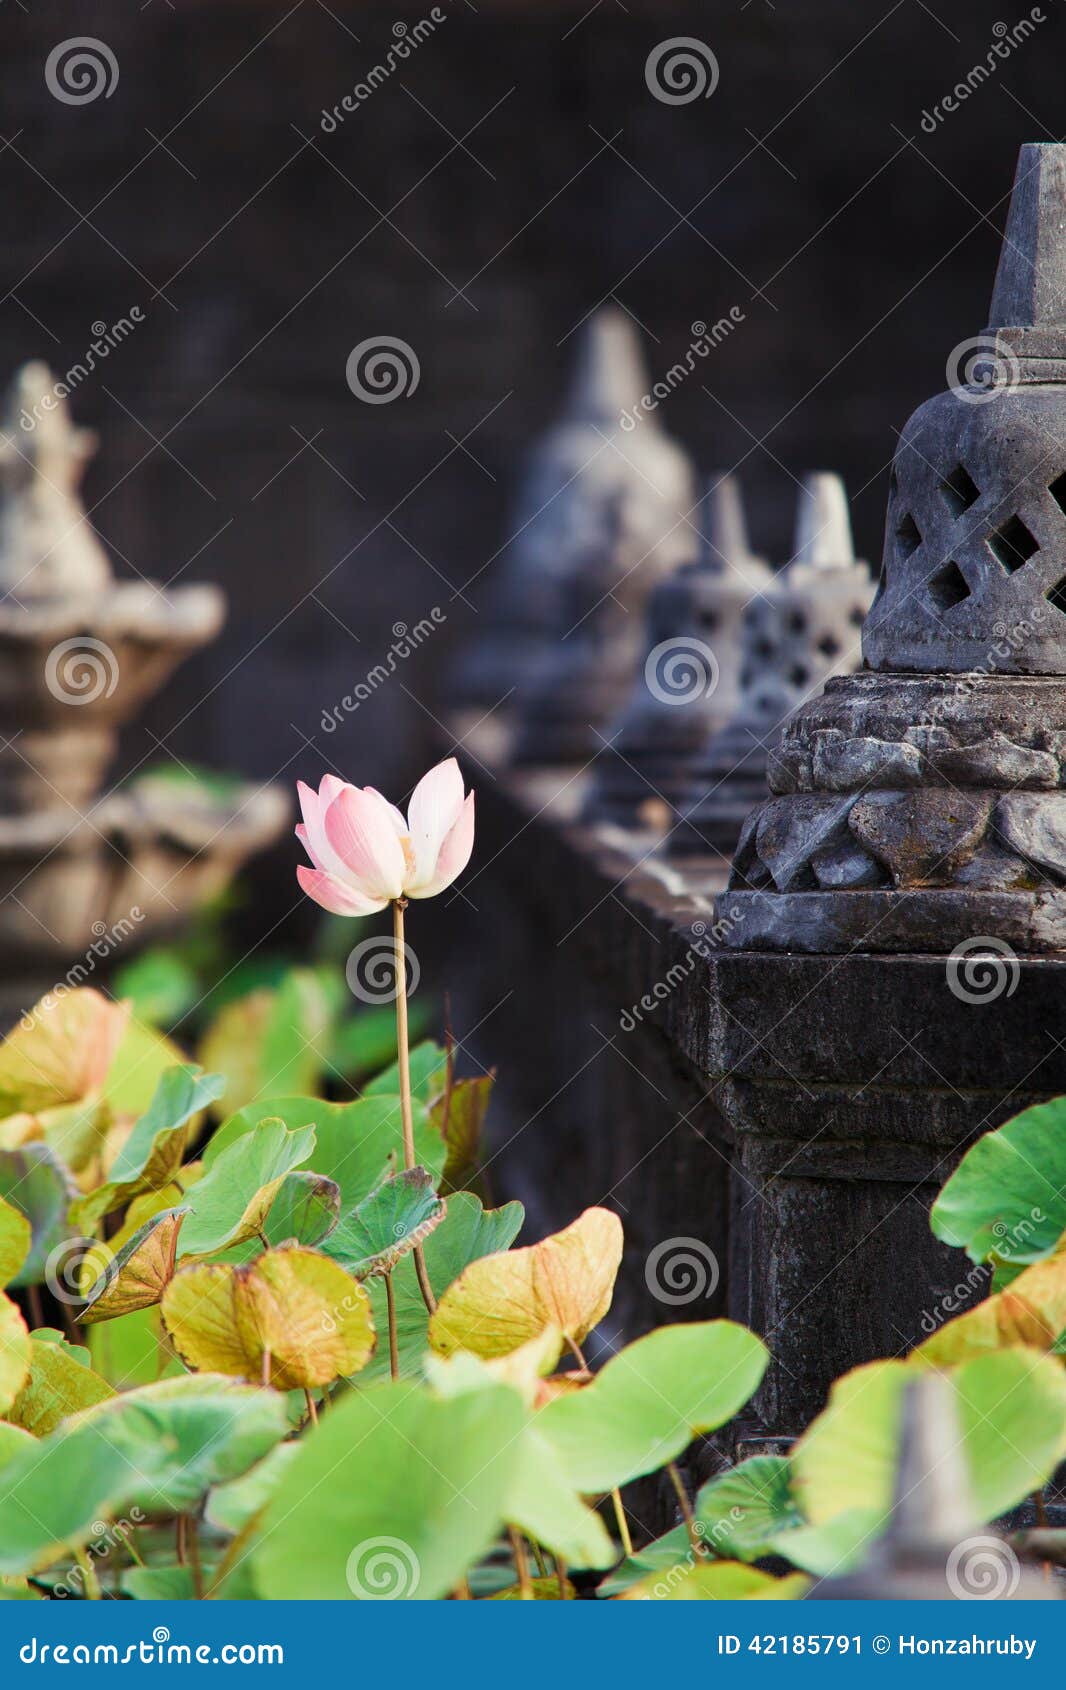 lotots flower in buddhist temple